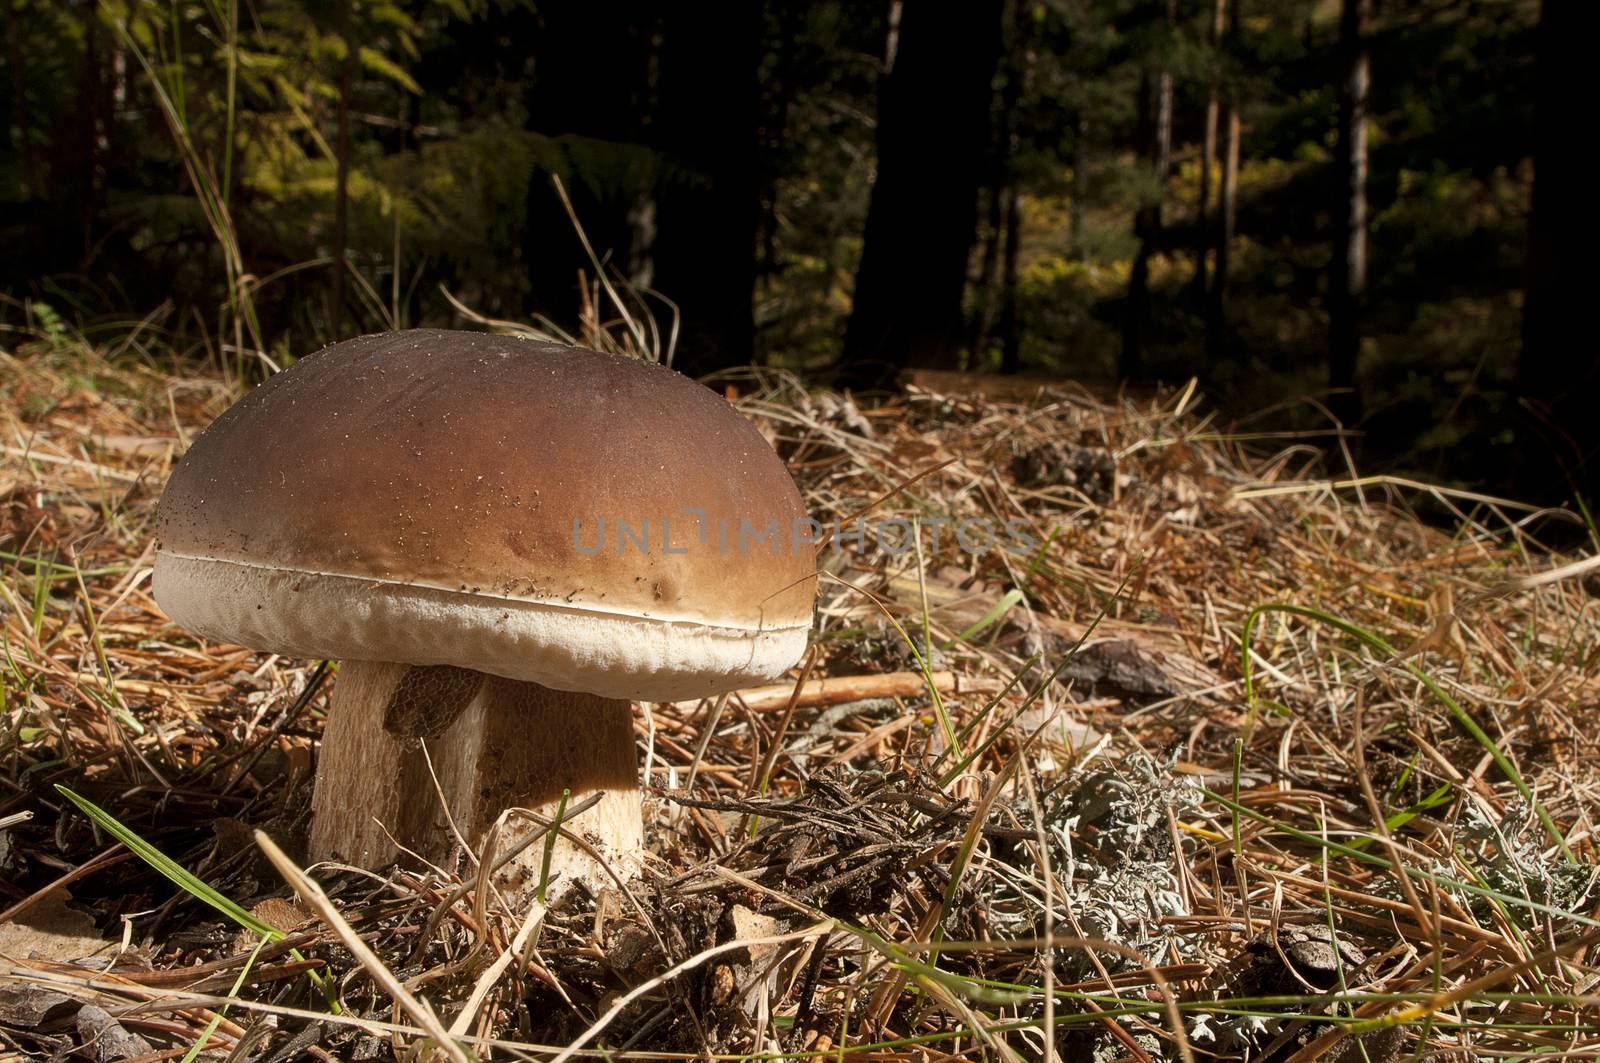 Mushroom, boletus edulis, in pine forest  by jalonsohu@gmail.com